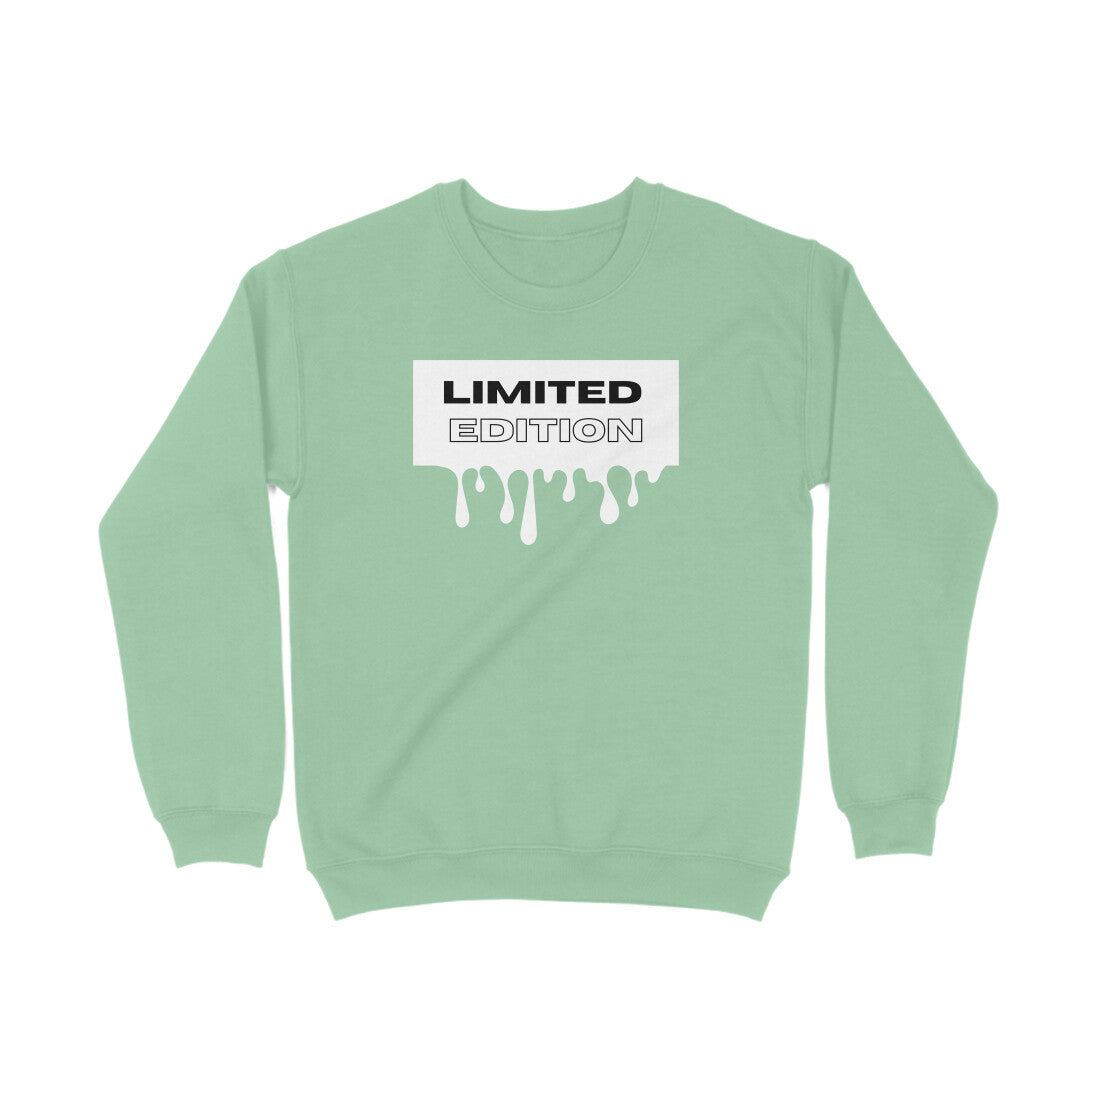 Limited Edition - Unisex Sweatshirt